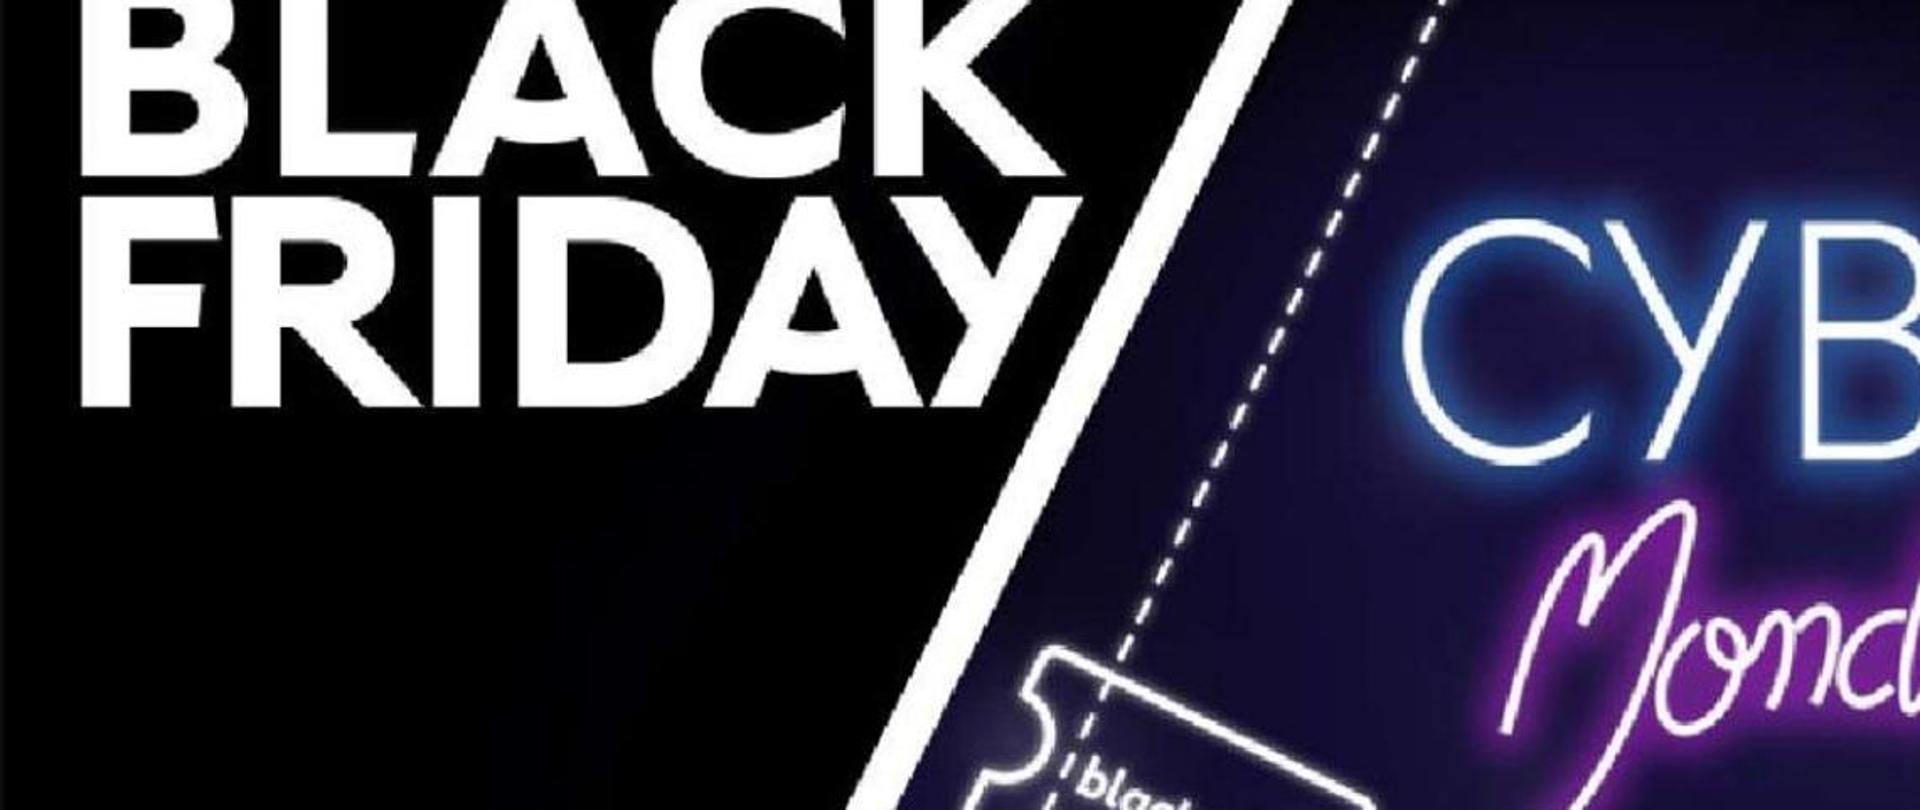 Grafika czarne tło i napisy Black Friday, CyberMonday